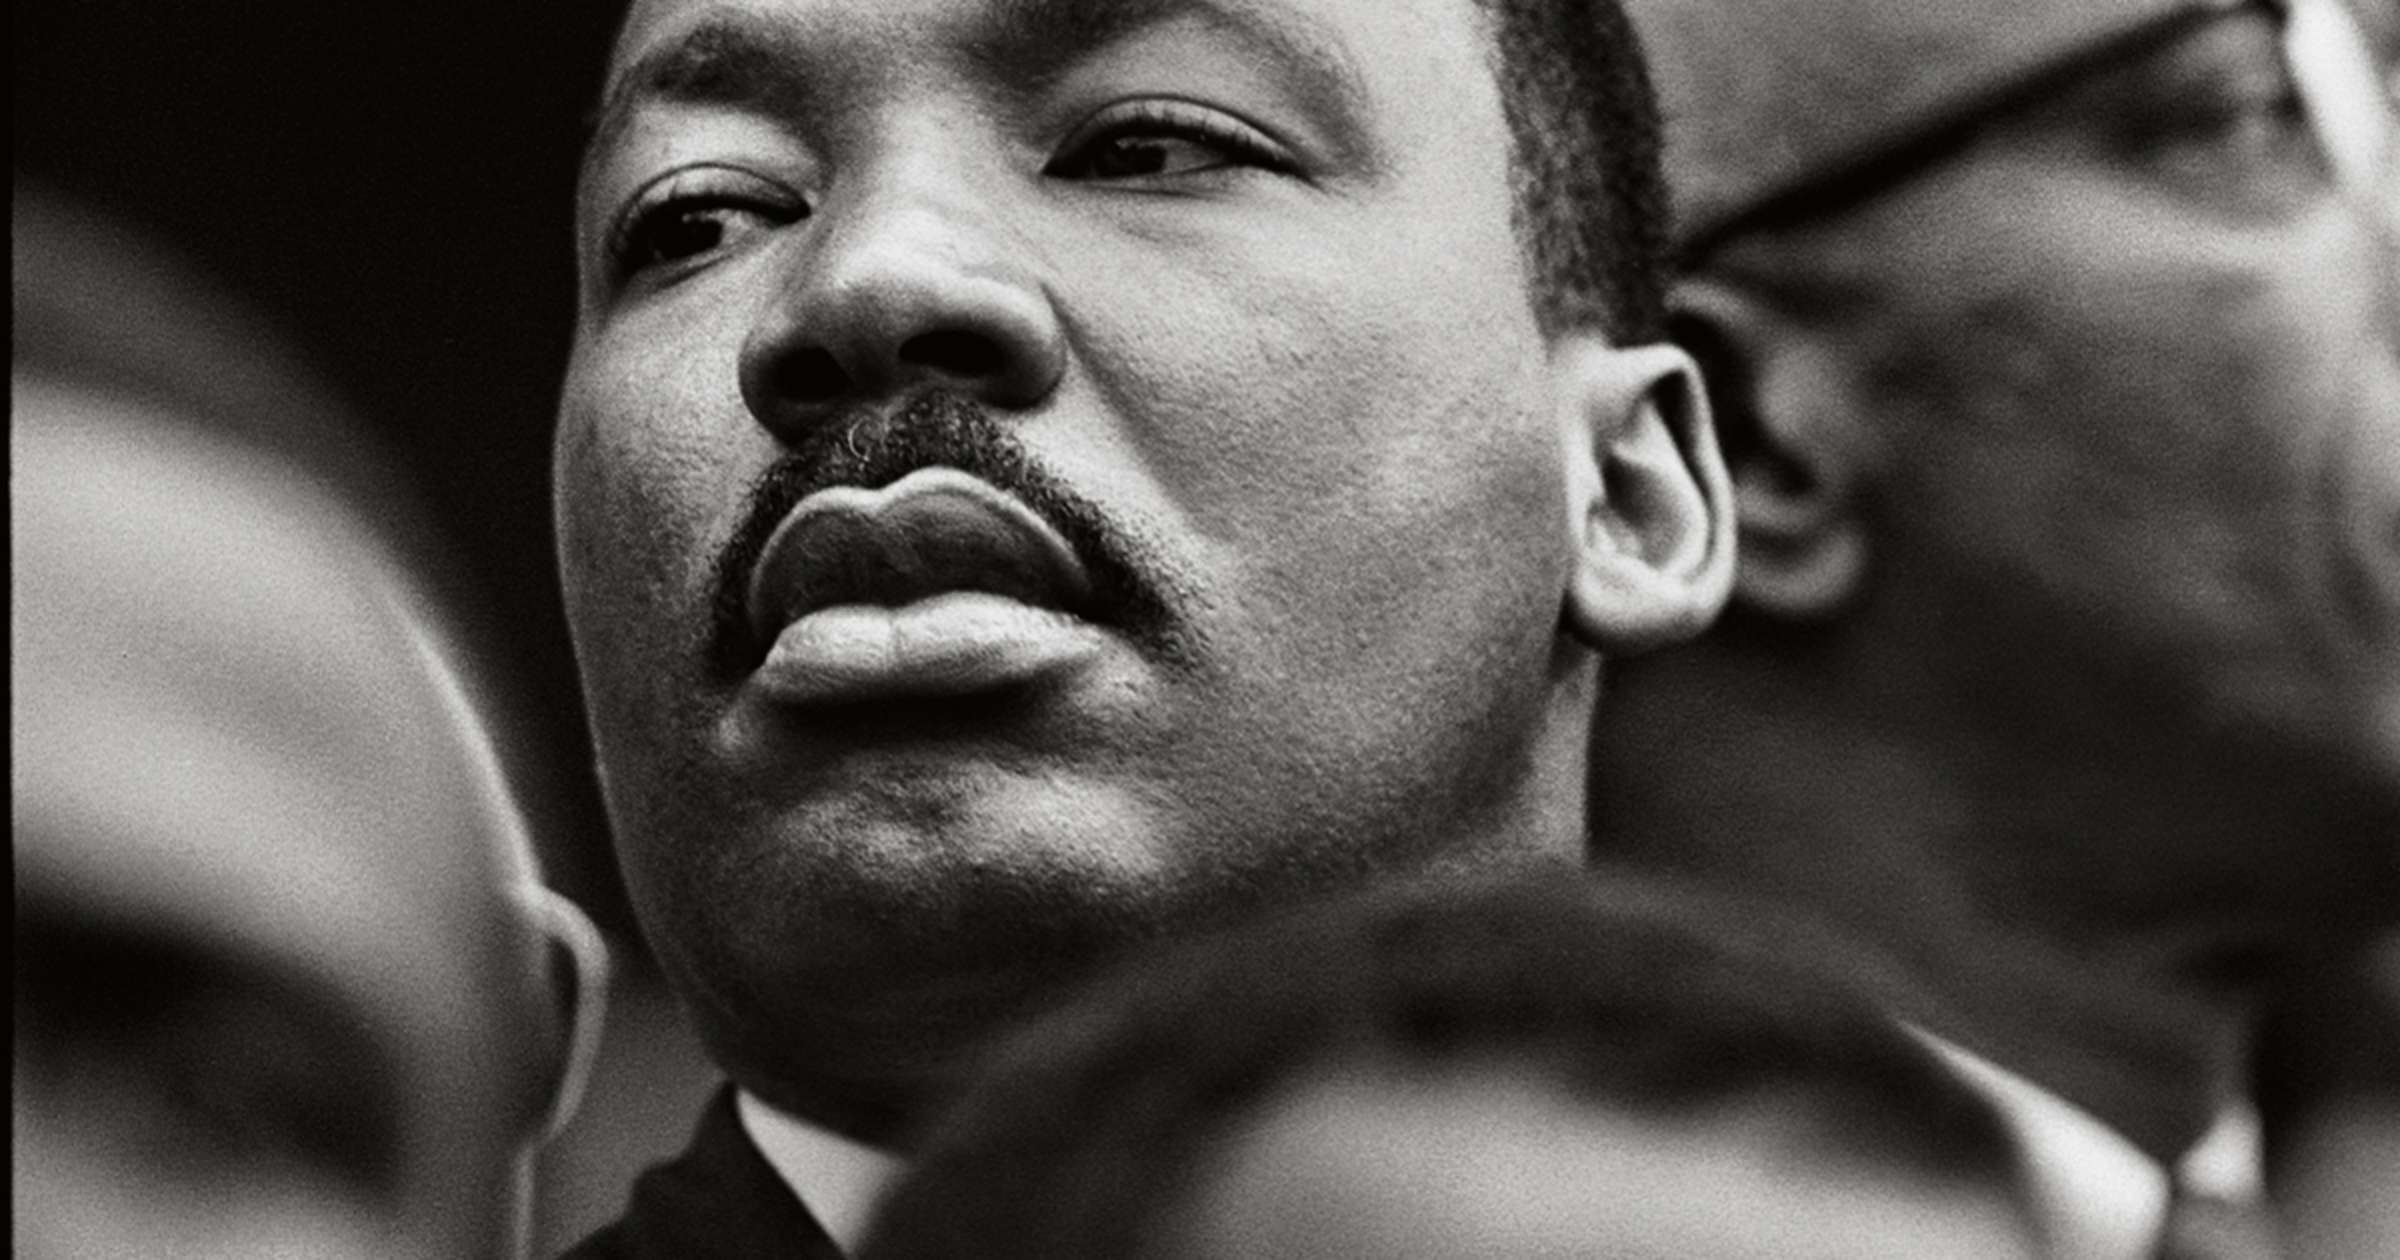 Steve Schapiro, Martin Luther King Jr., Selma, 1965 - Artwork 27960 | Jackson Fine Art2400 x 1260